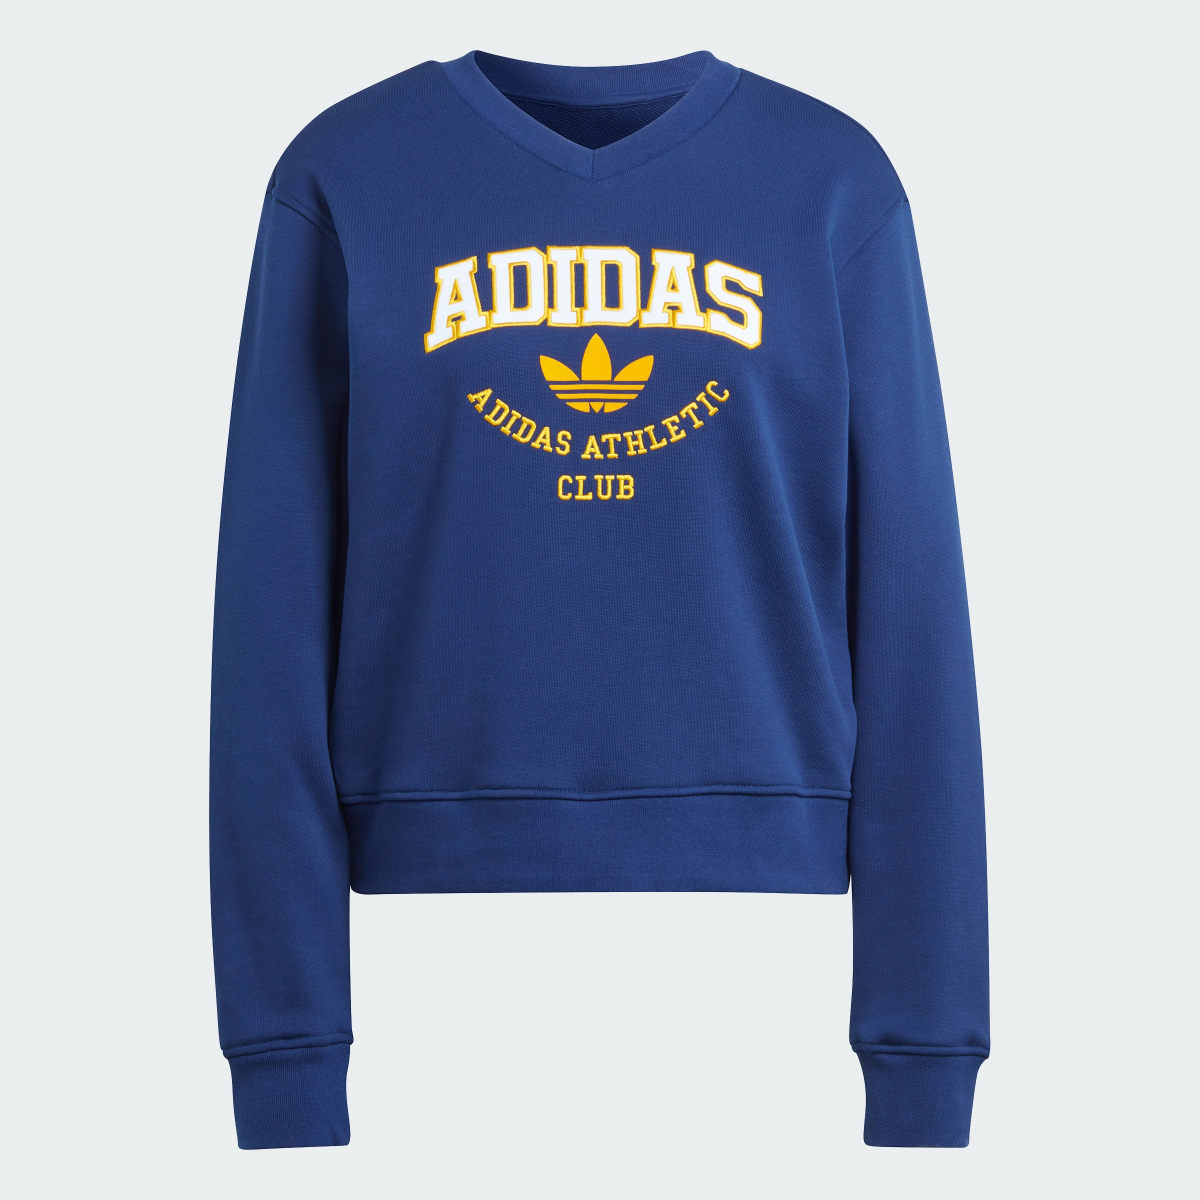 Adidas College Graphic Sweatshirt. 5